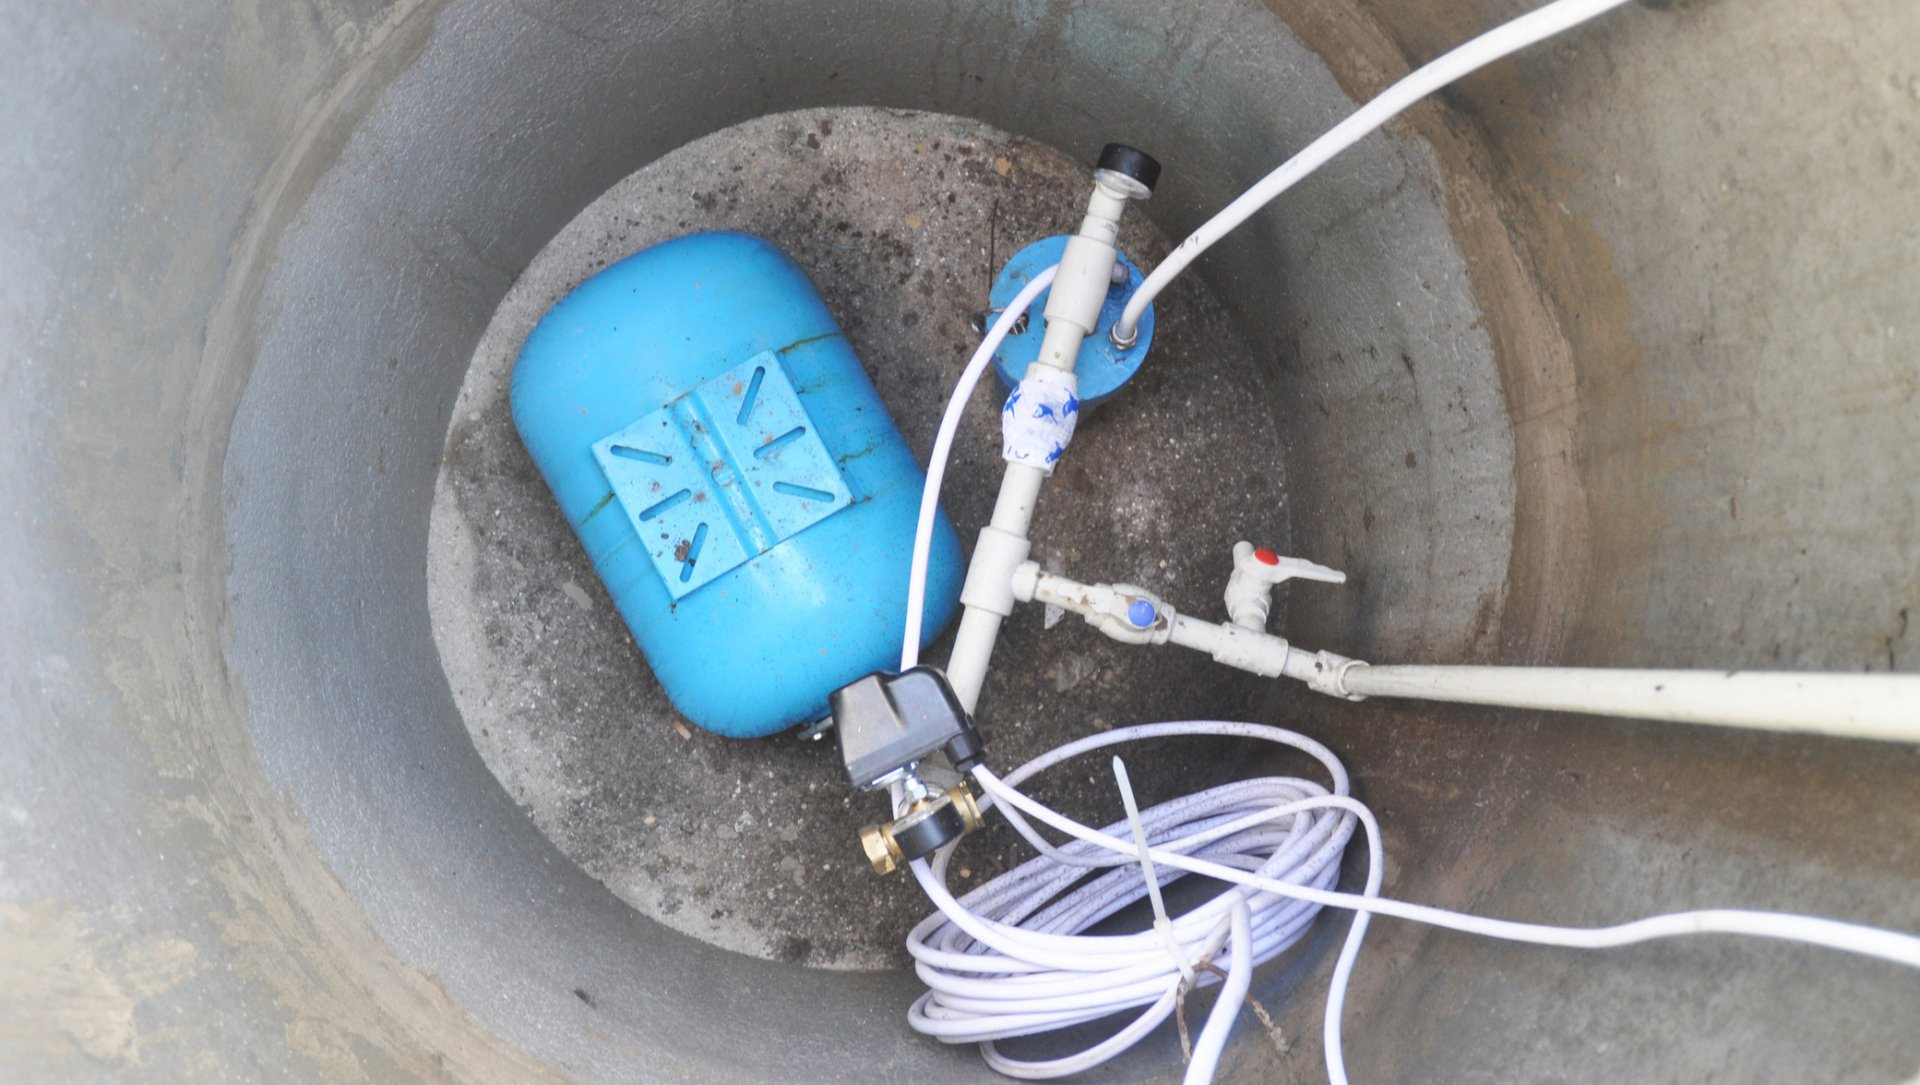 Sump pump in a hole - Fairfield, PA - Chuck Alexander's Plumbing, Pumps & Water Treatment